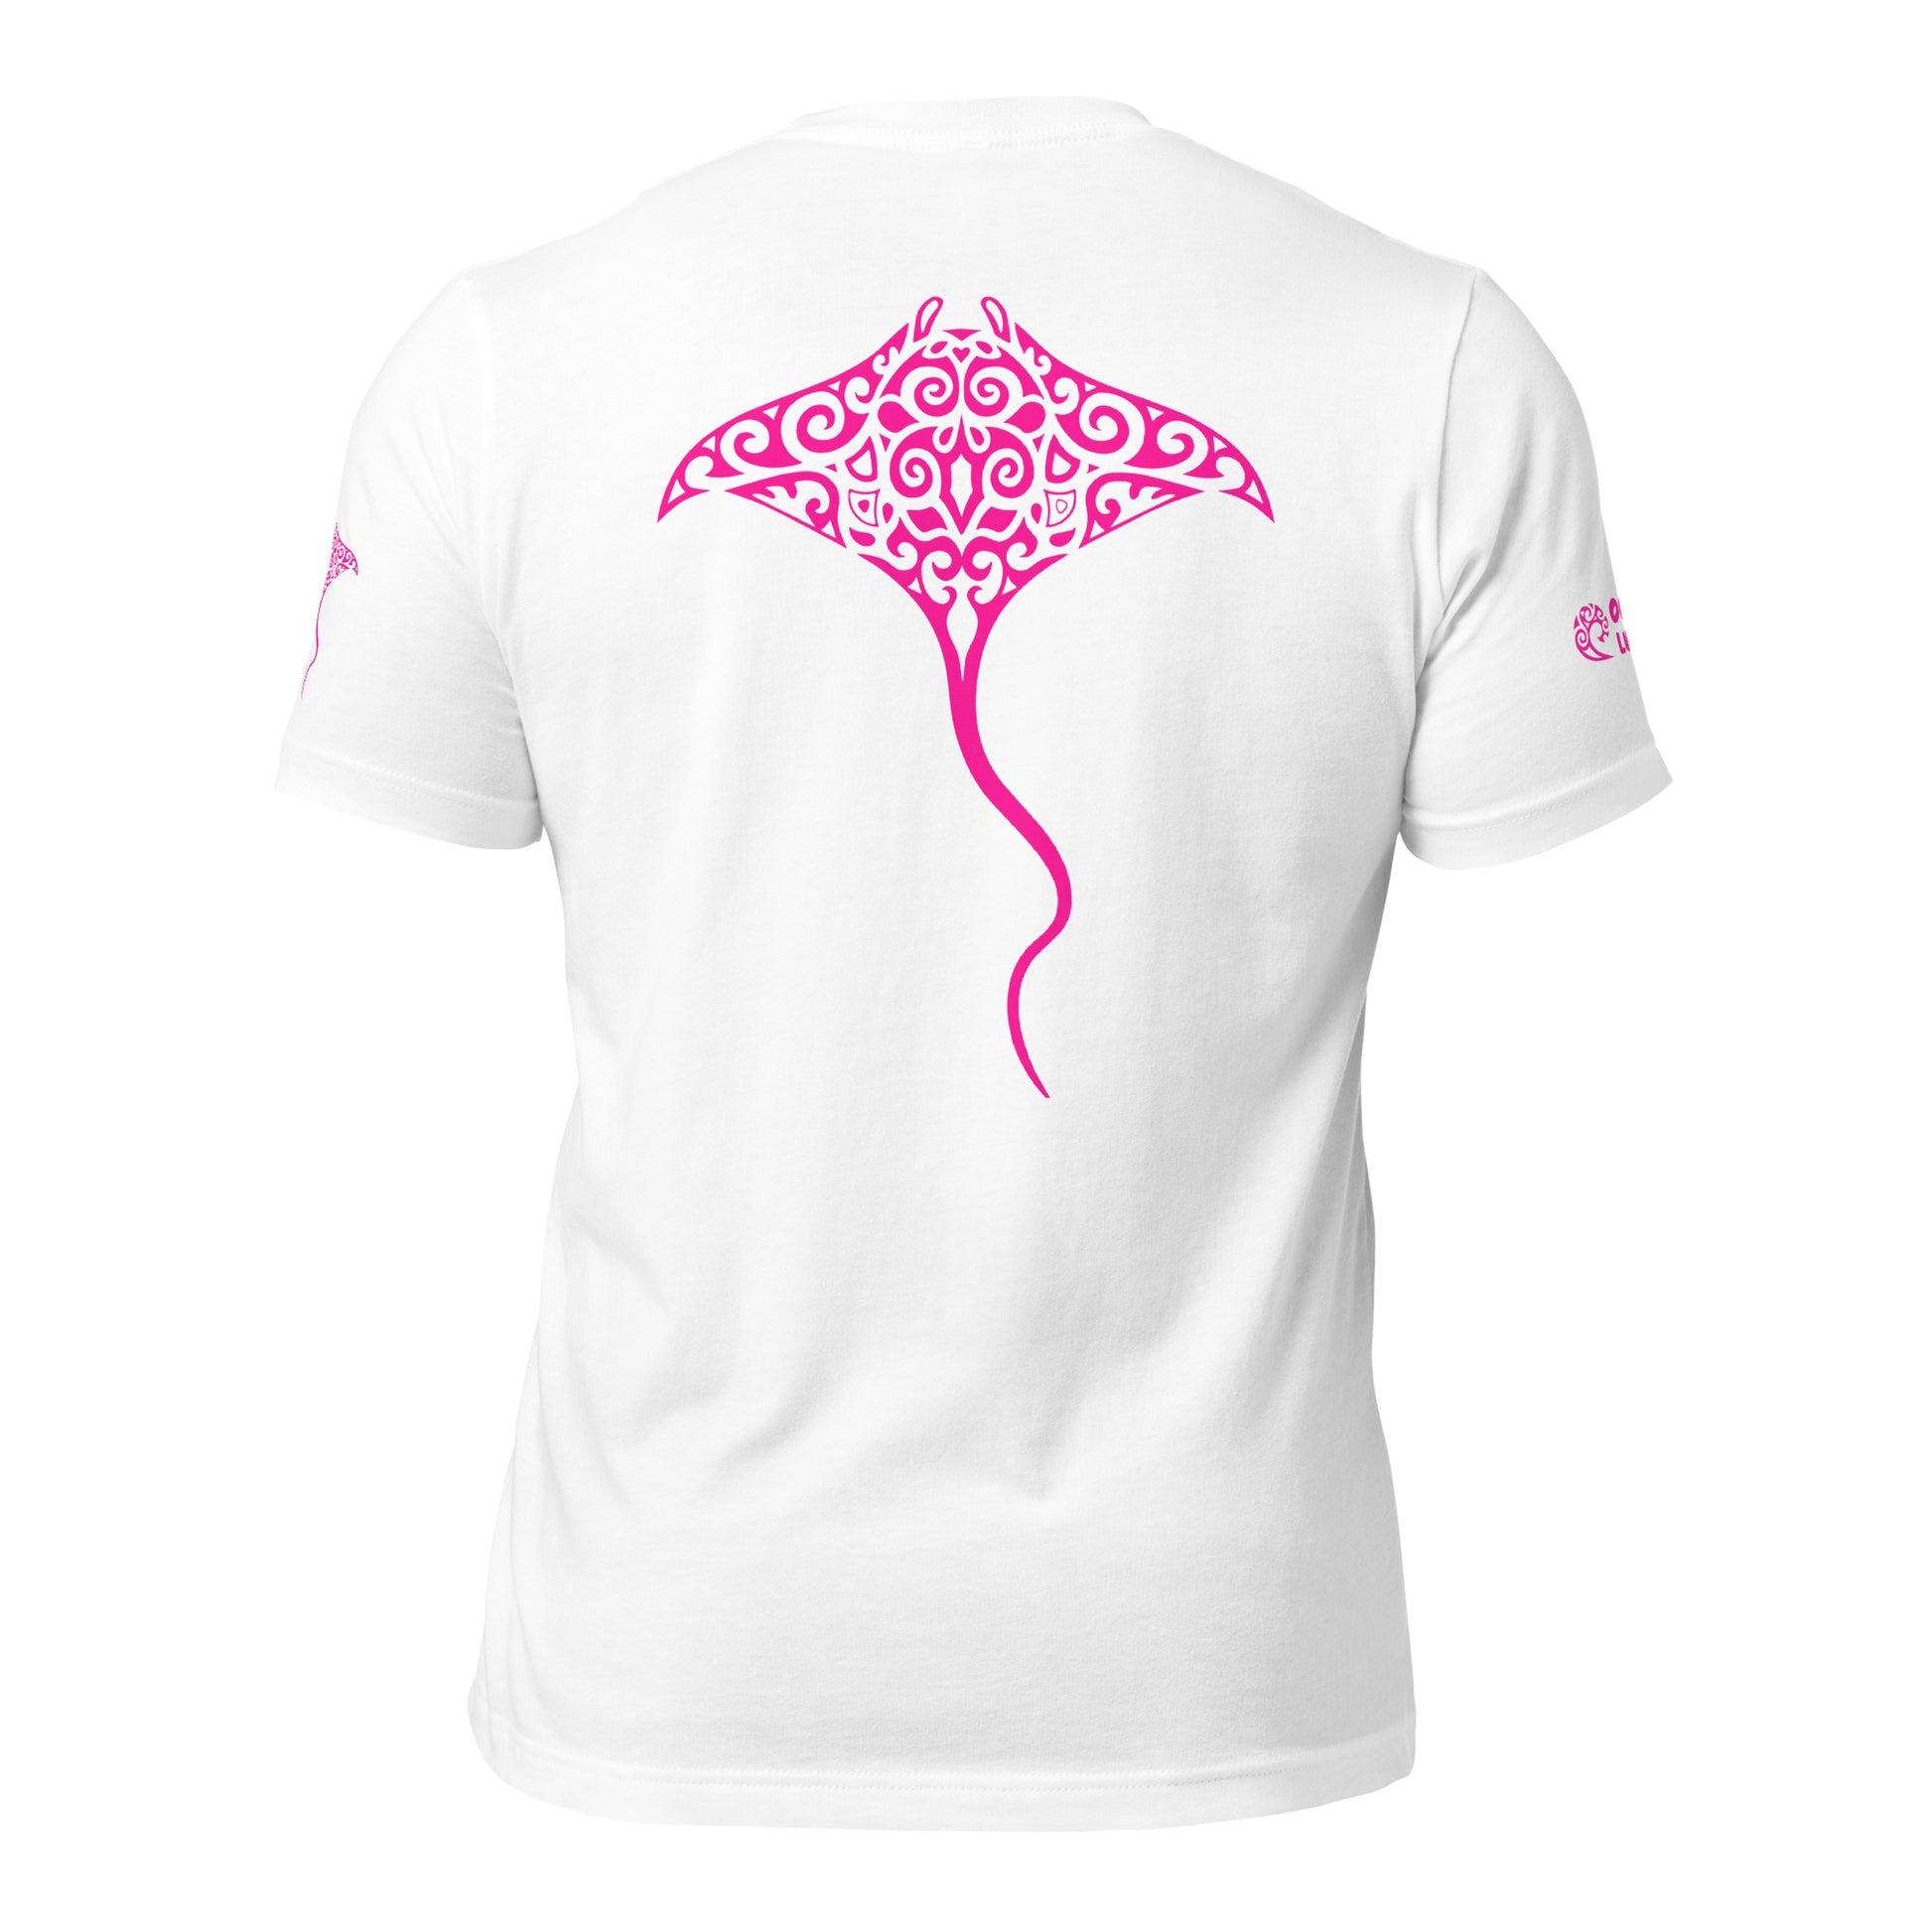 Polynesian Tribal Samoan Manta Ray T-shirt For Men and Women Back Pink on White